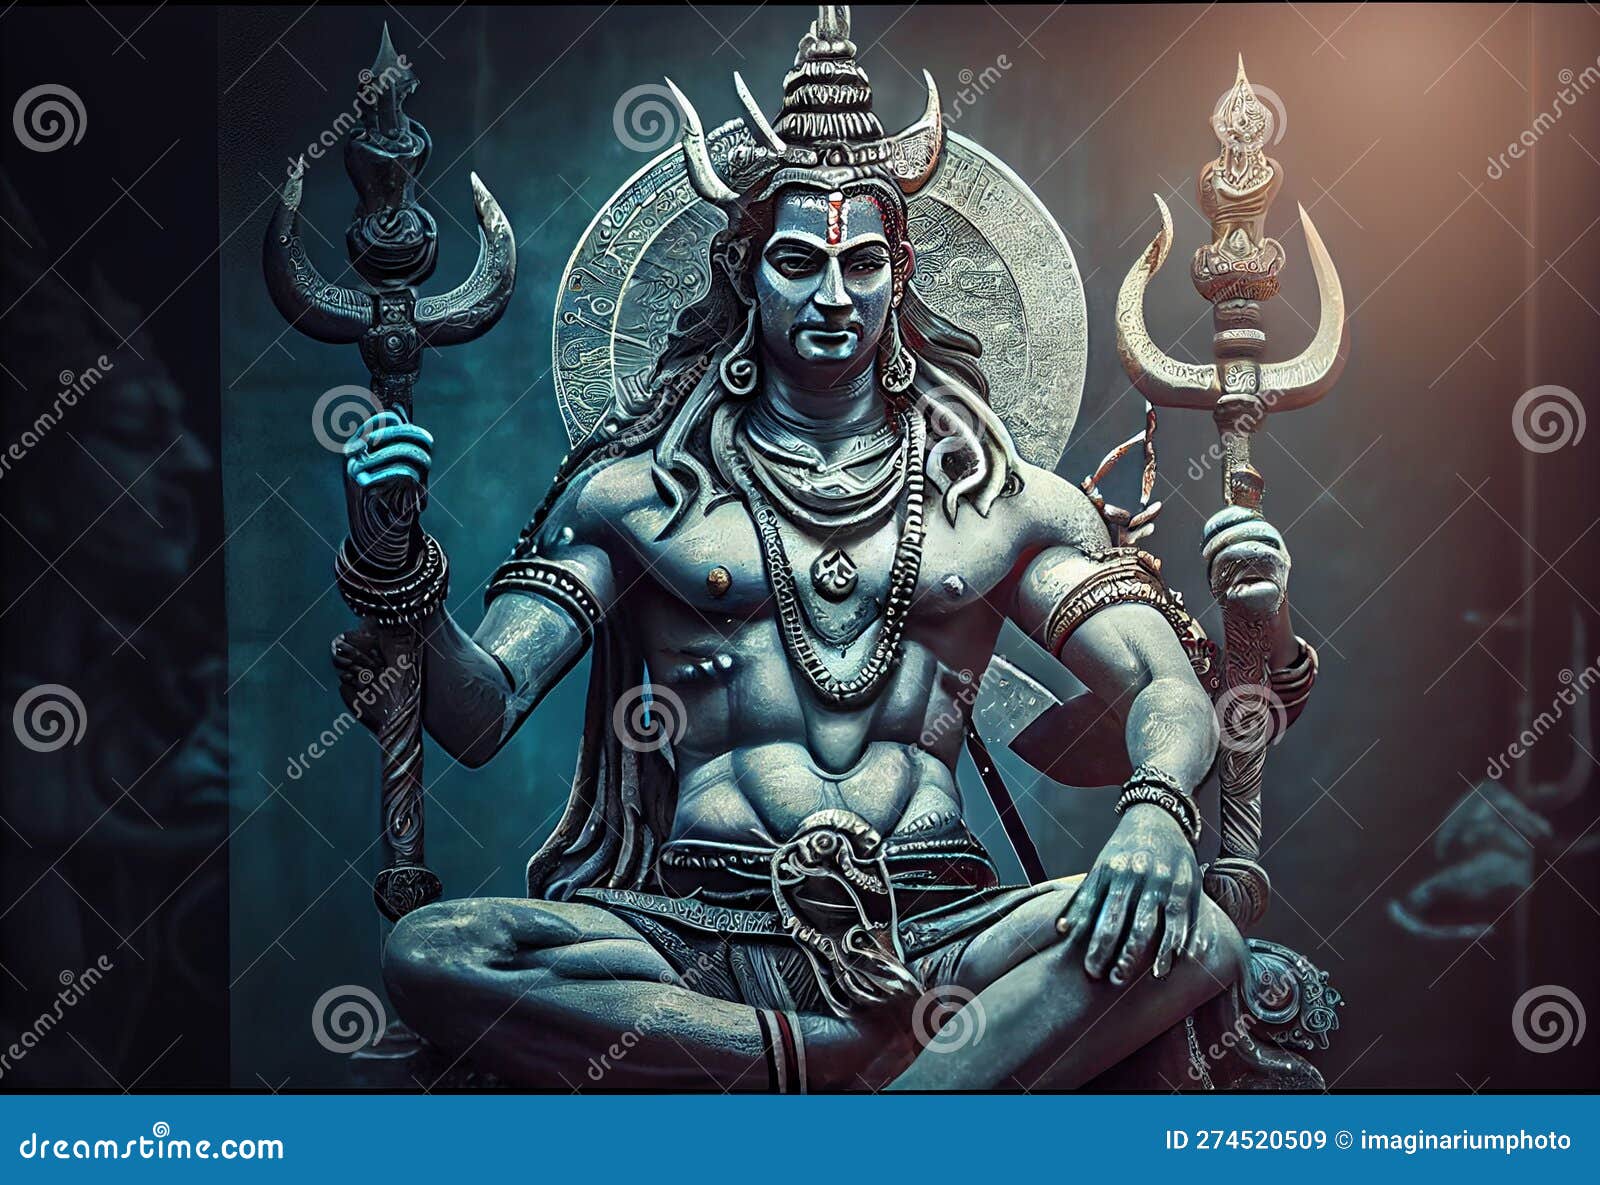 Hindu God Shiva iPhone Wallpaper HD - iPhone Wallpapers